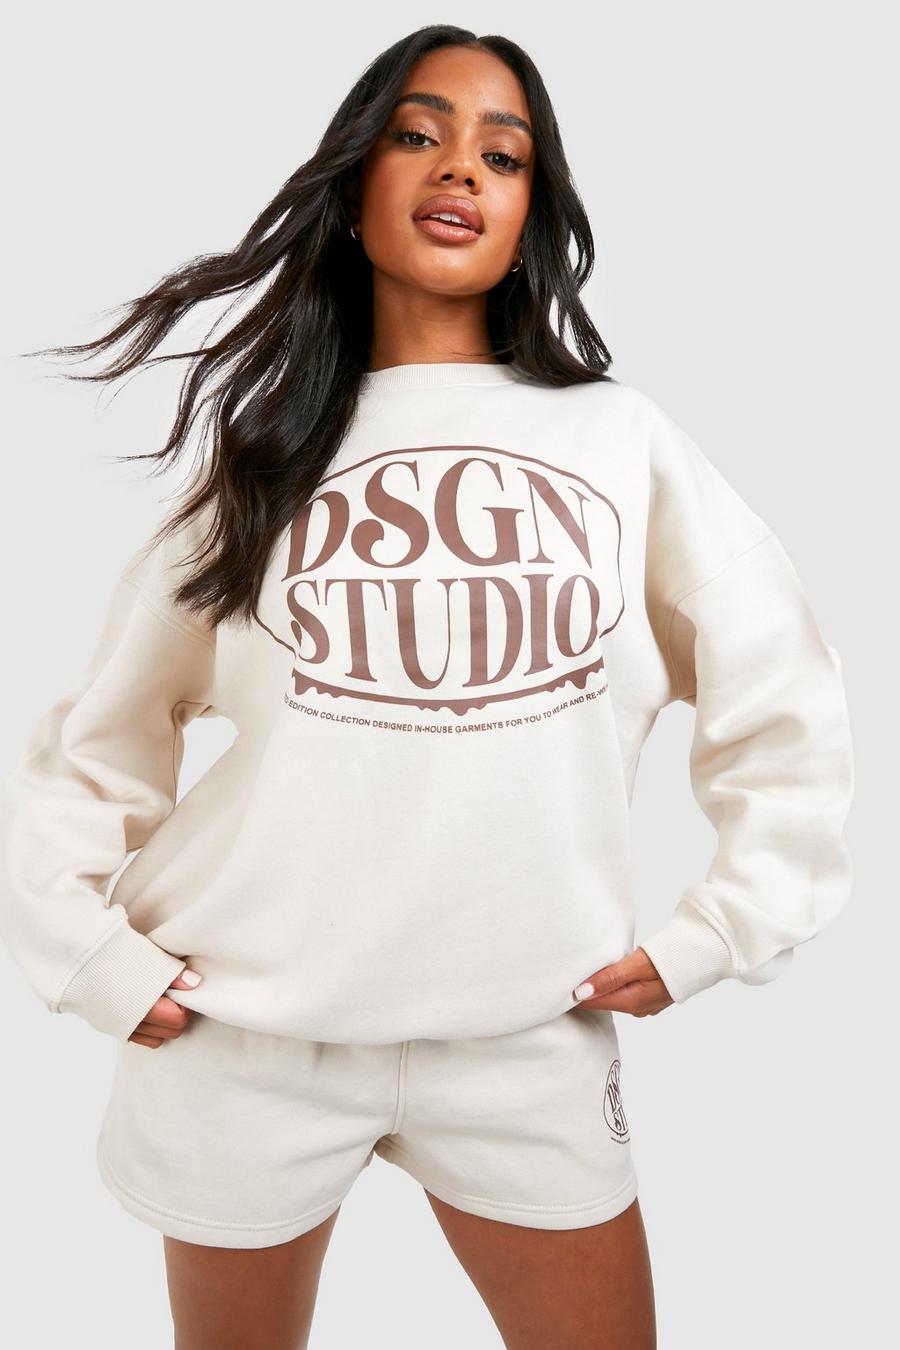 Kurzer Sweatshirt-Trainingsanzug mit Dsgn Studio Slogan, Stone